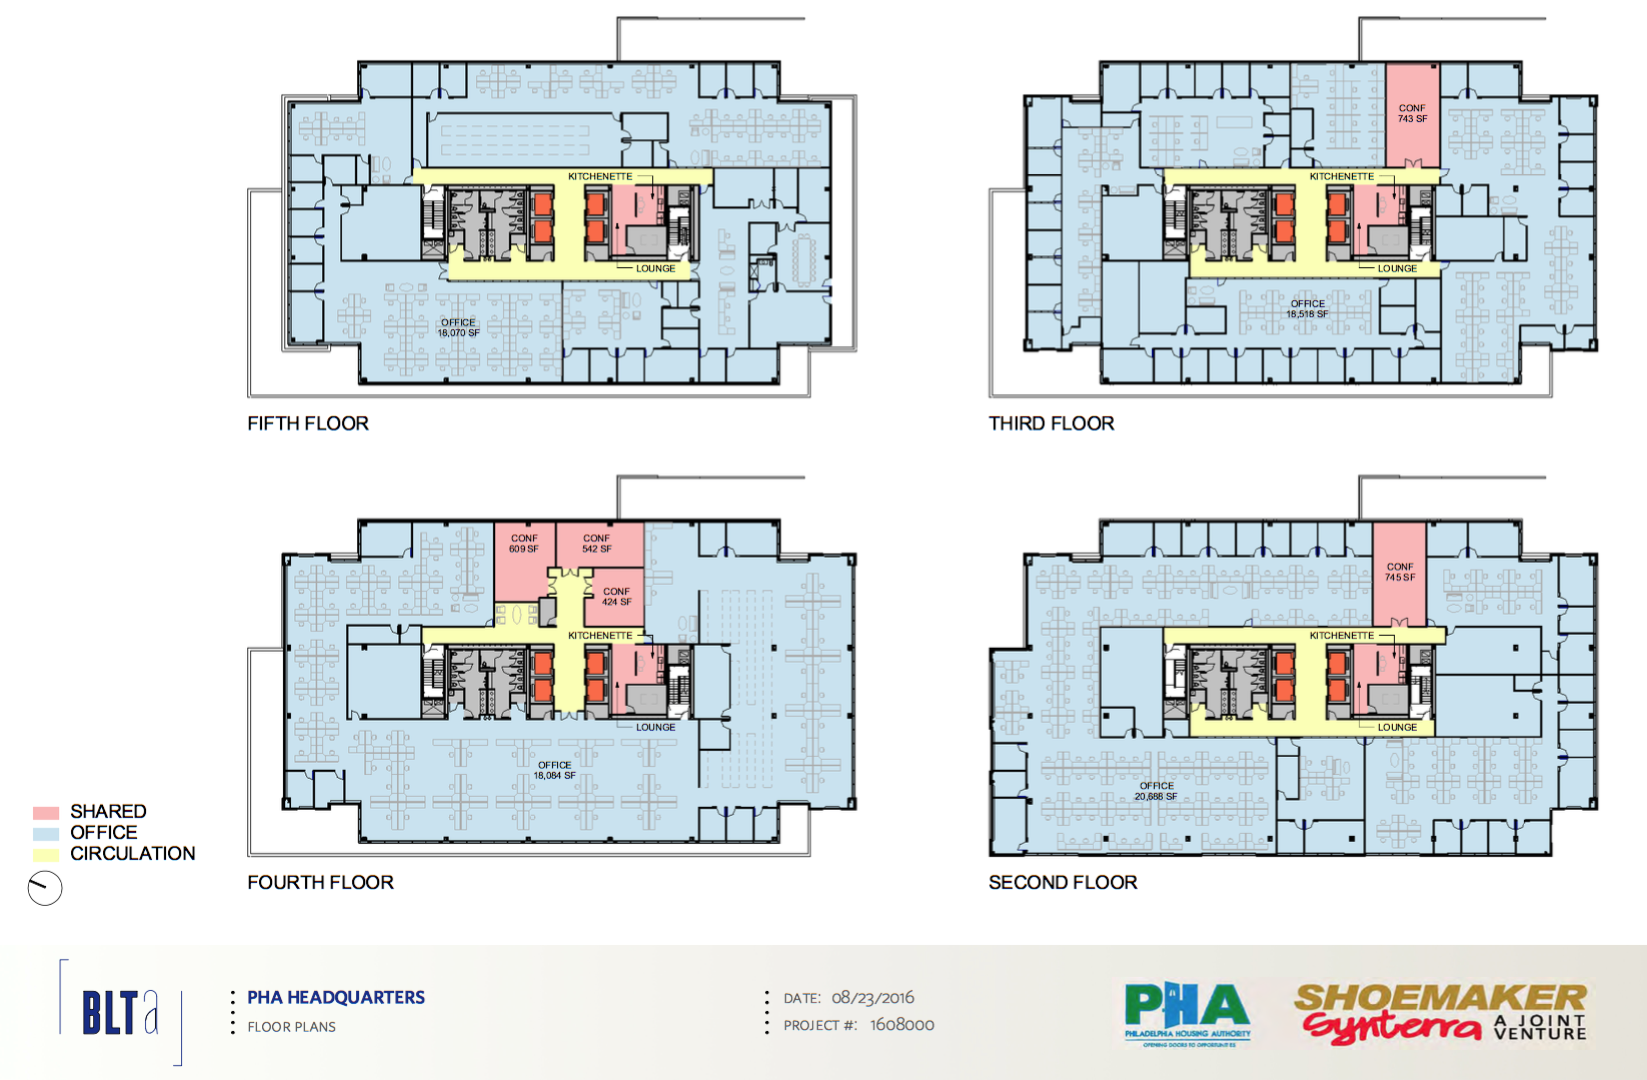 PHA Headquarters: Floor plans | BLTa, CDR presentation, Sept. 2016